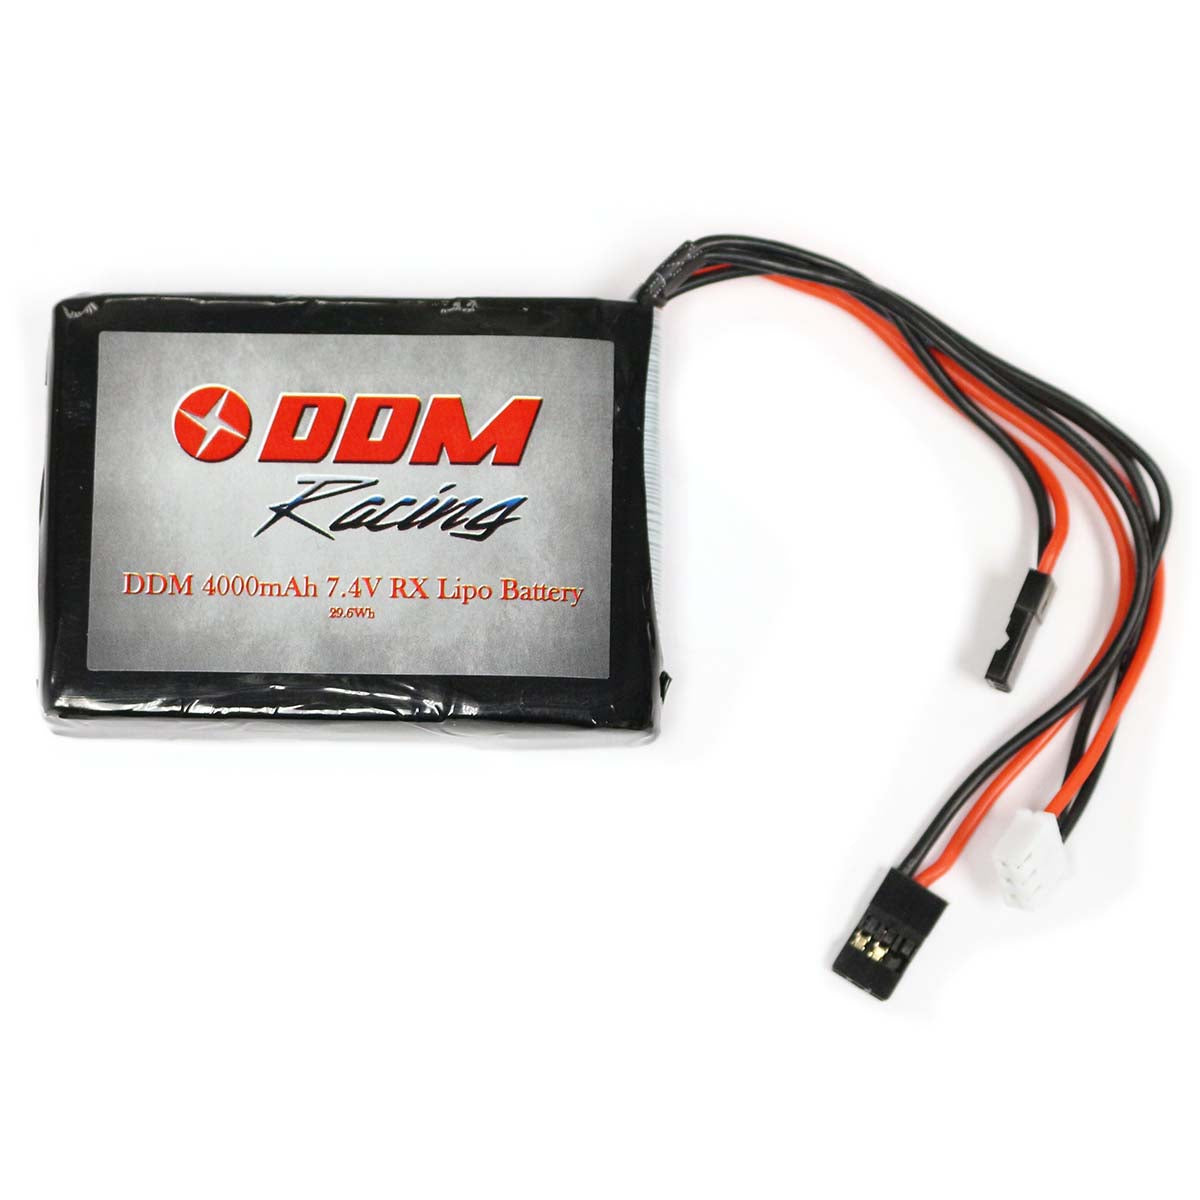 DDM Racing: 7.4v 4000mAh RX LiPo Battery for HPI Baja 5B/5T/5SC